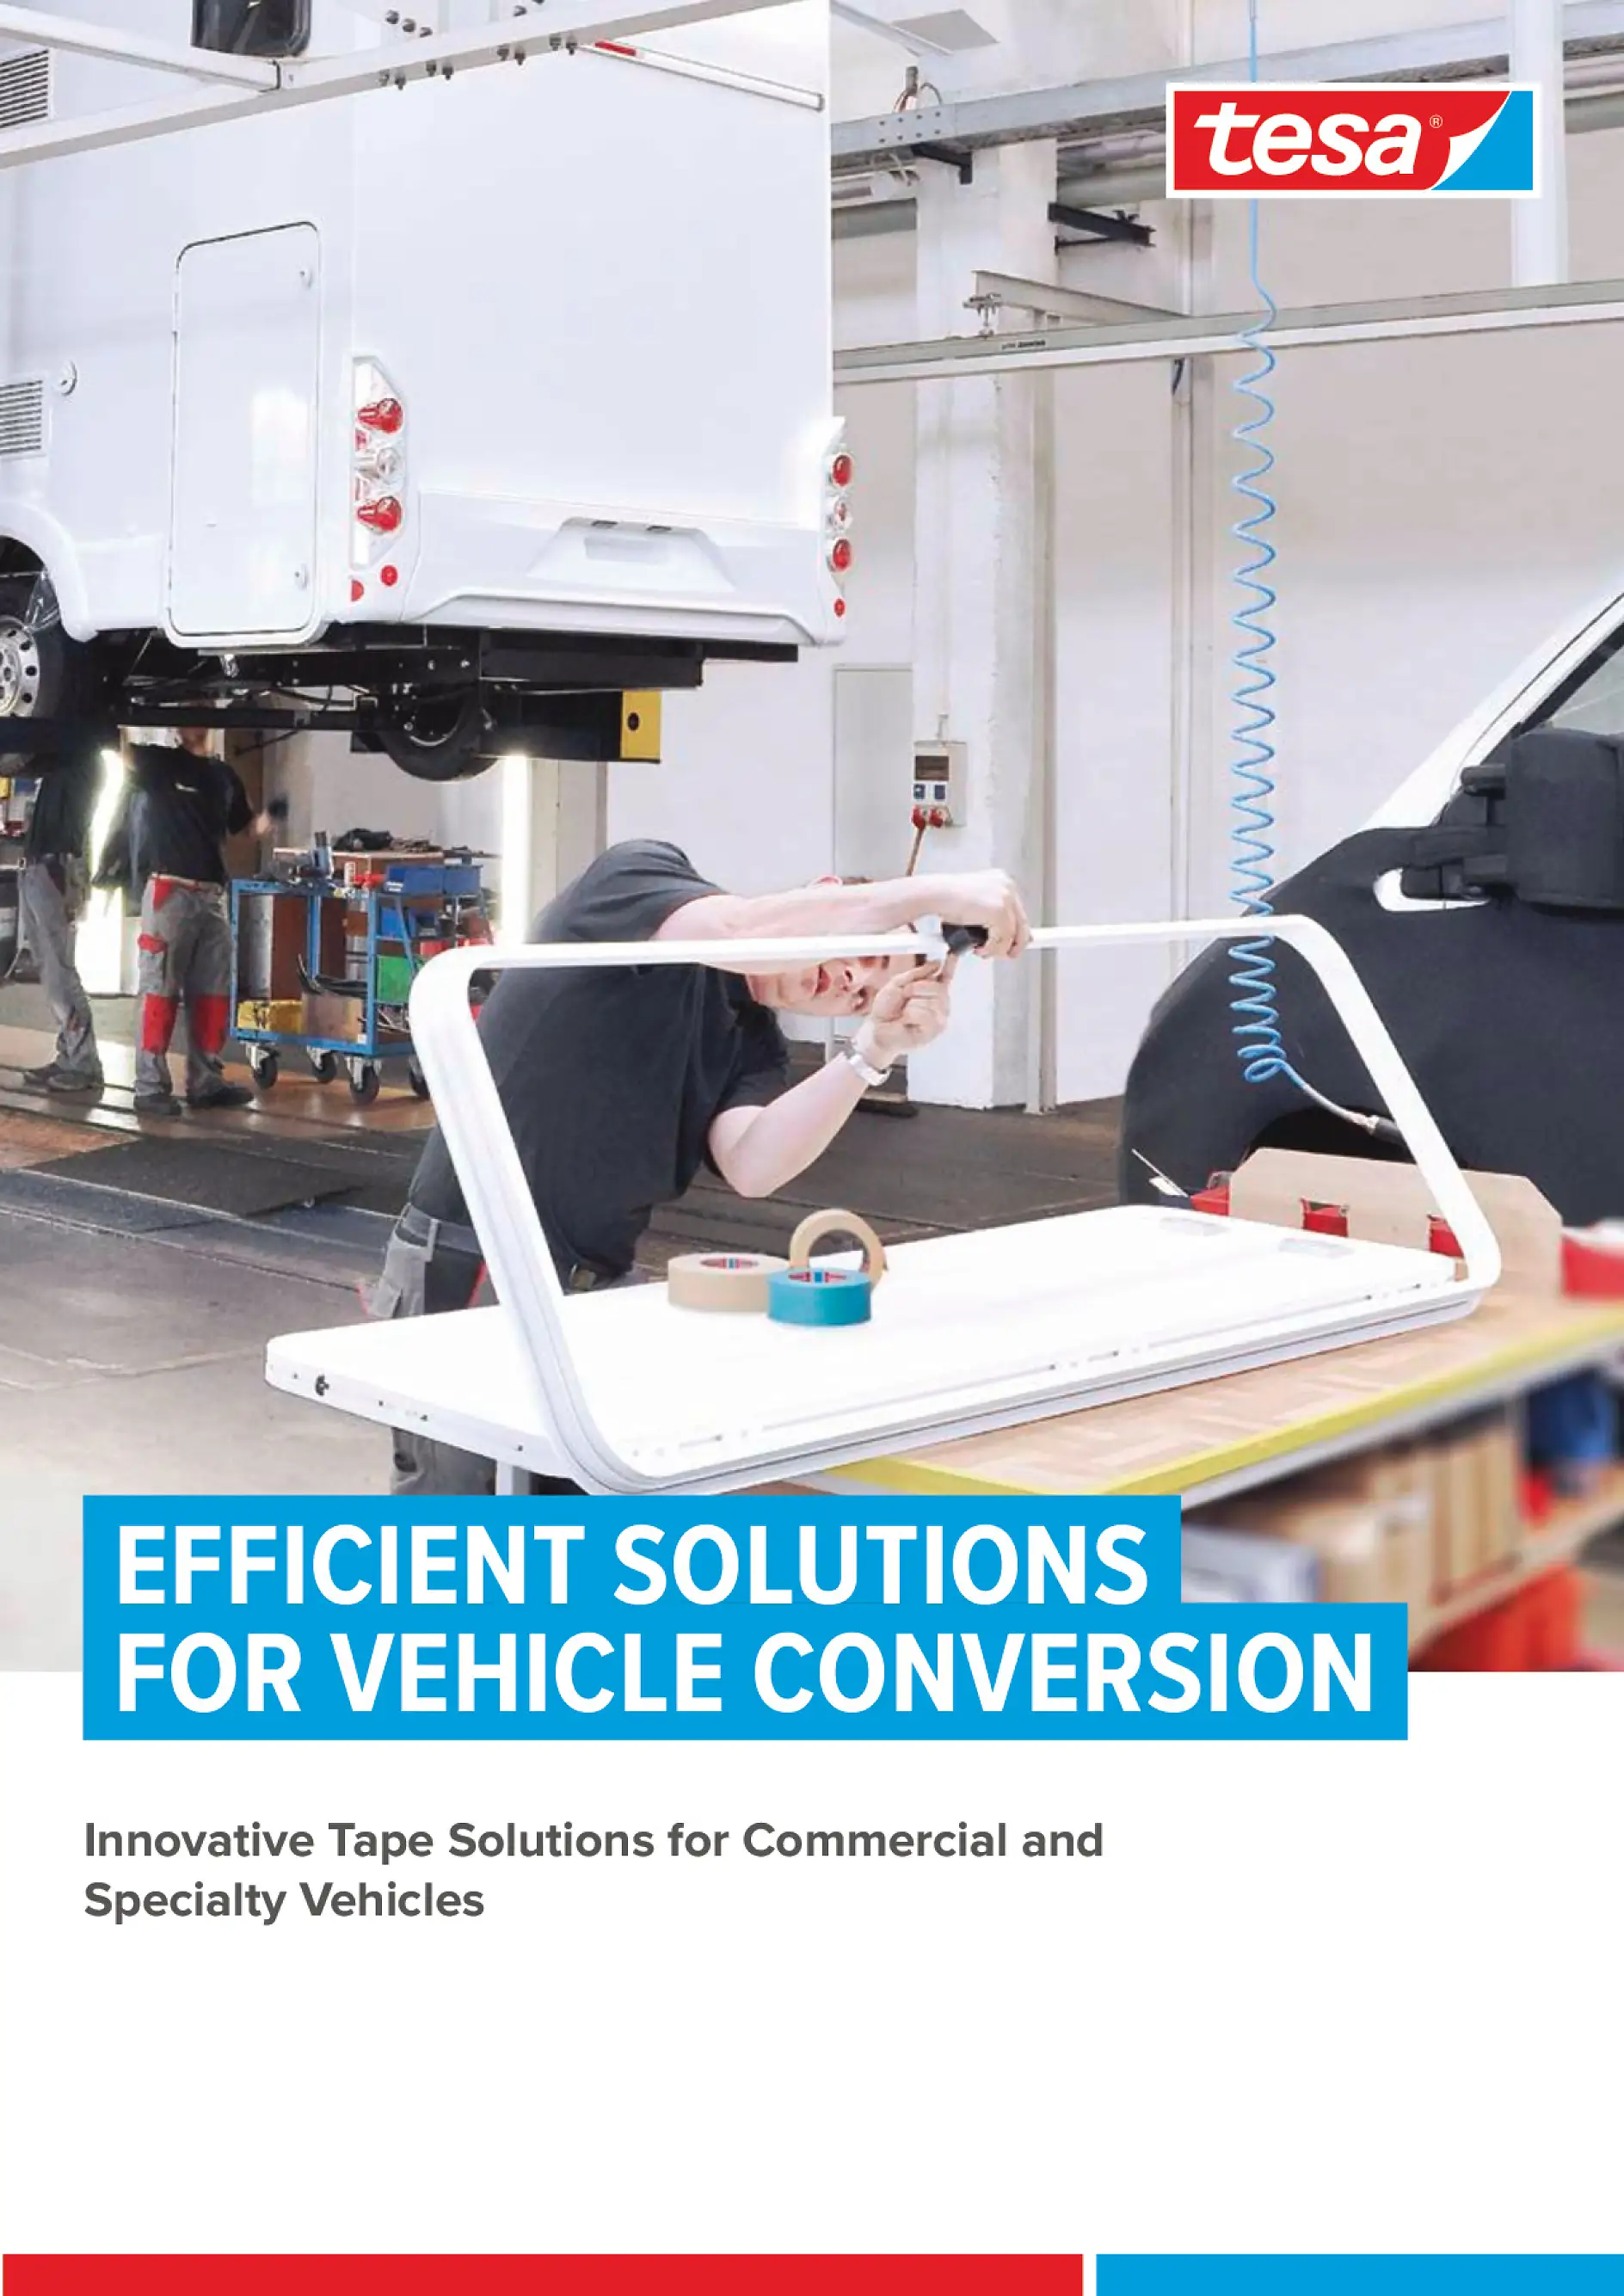 tesa-Specialty-Vehicles-Industry-Tape-Solutions-web-folder